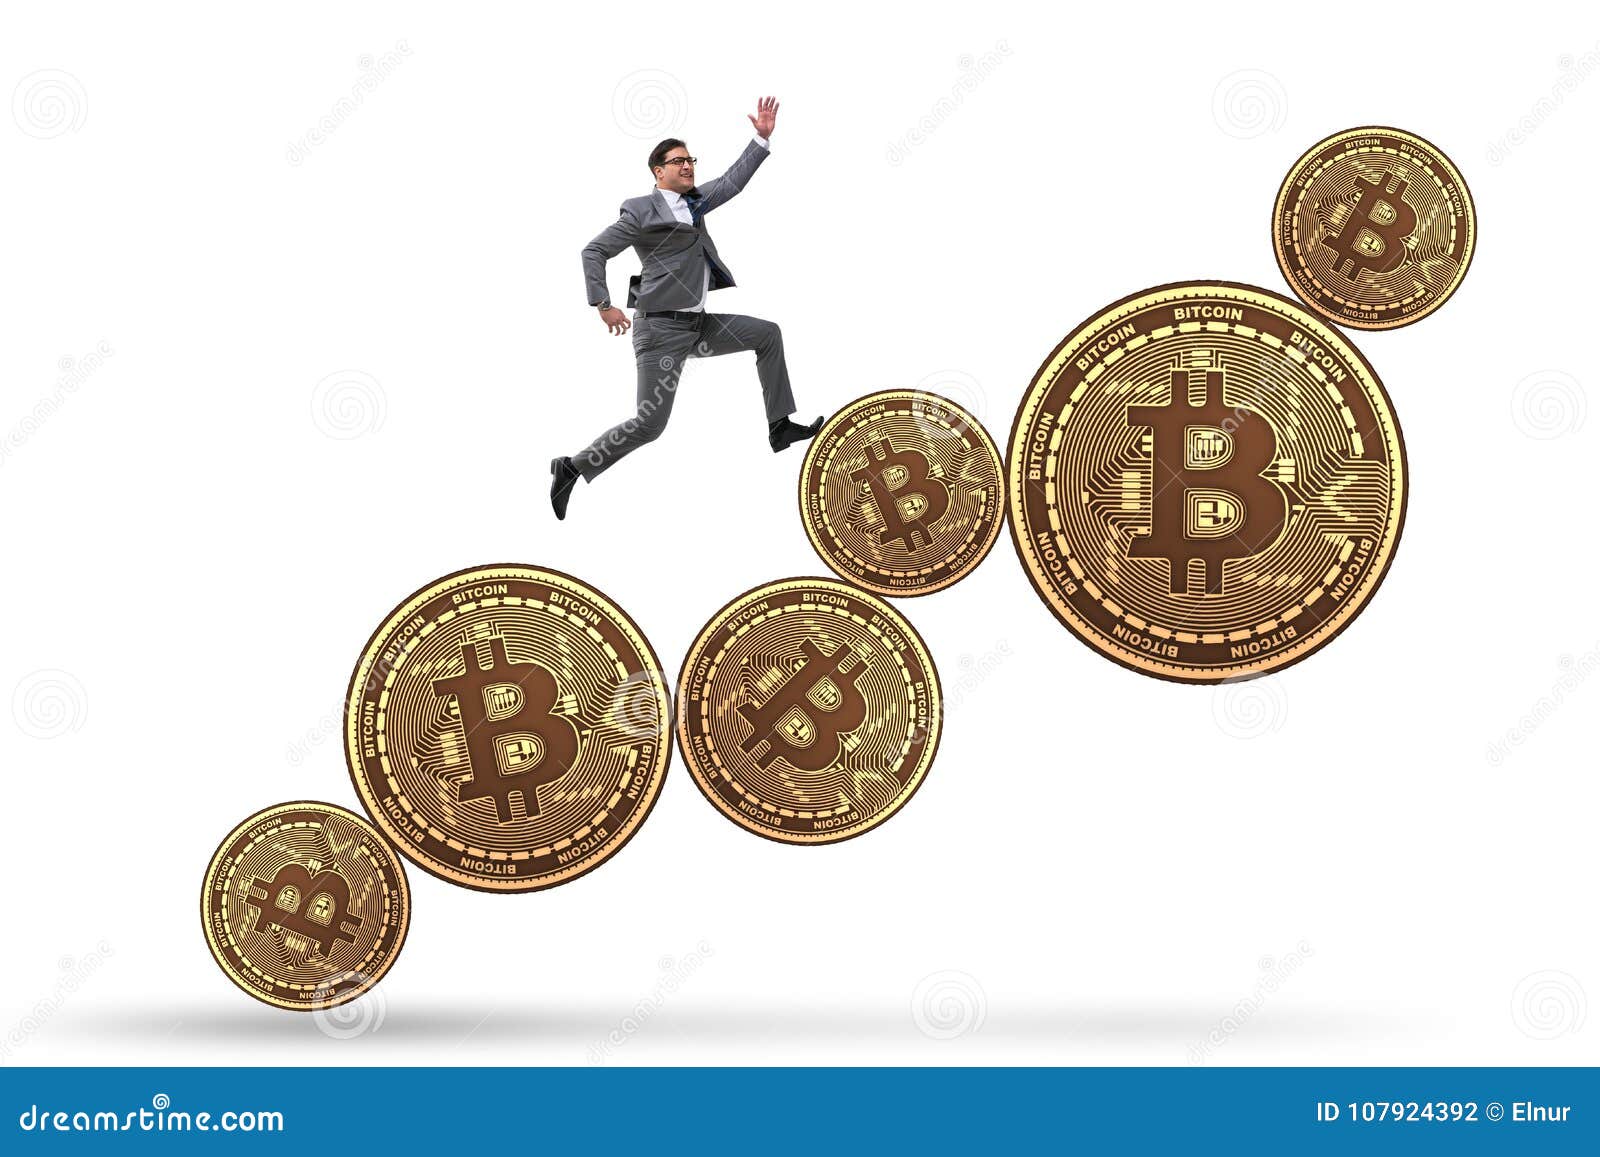 The Businessman In Bitcoin Price Increase Concept Stock Photo - Image of increase, climbing ...